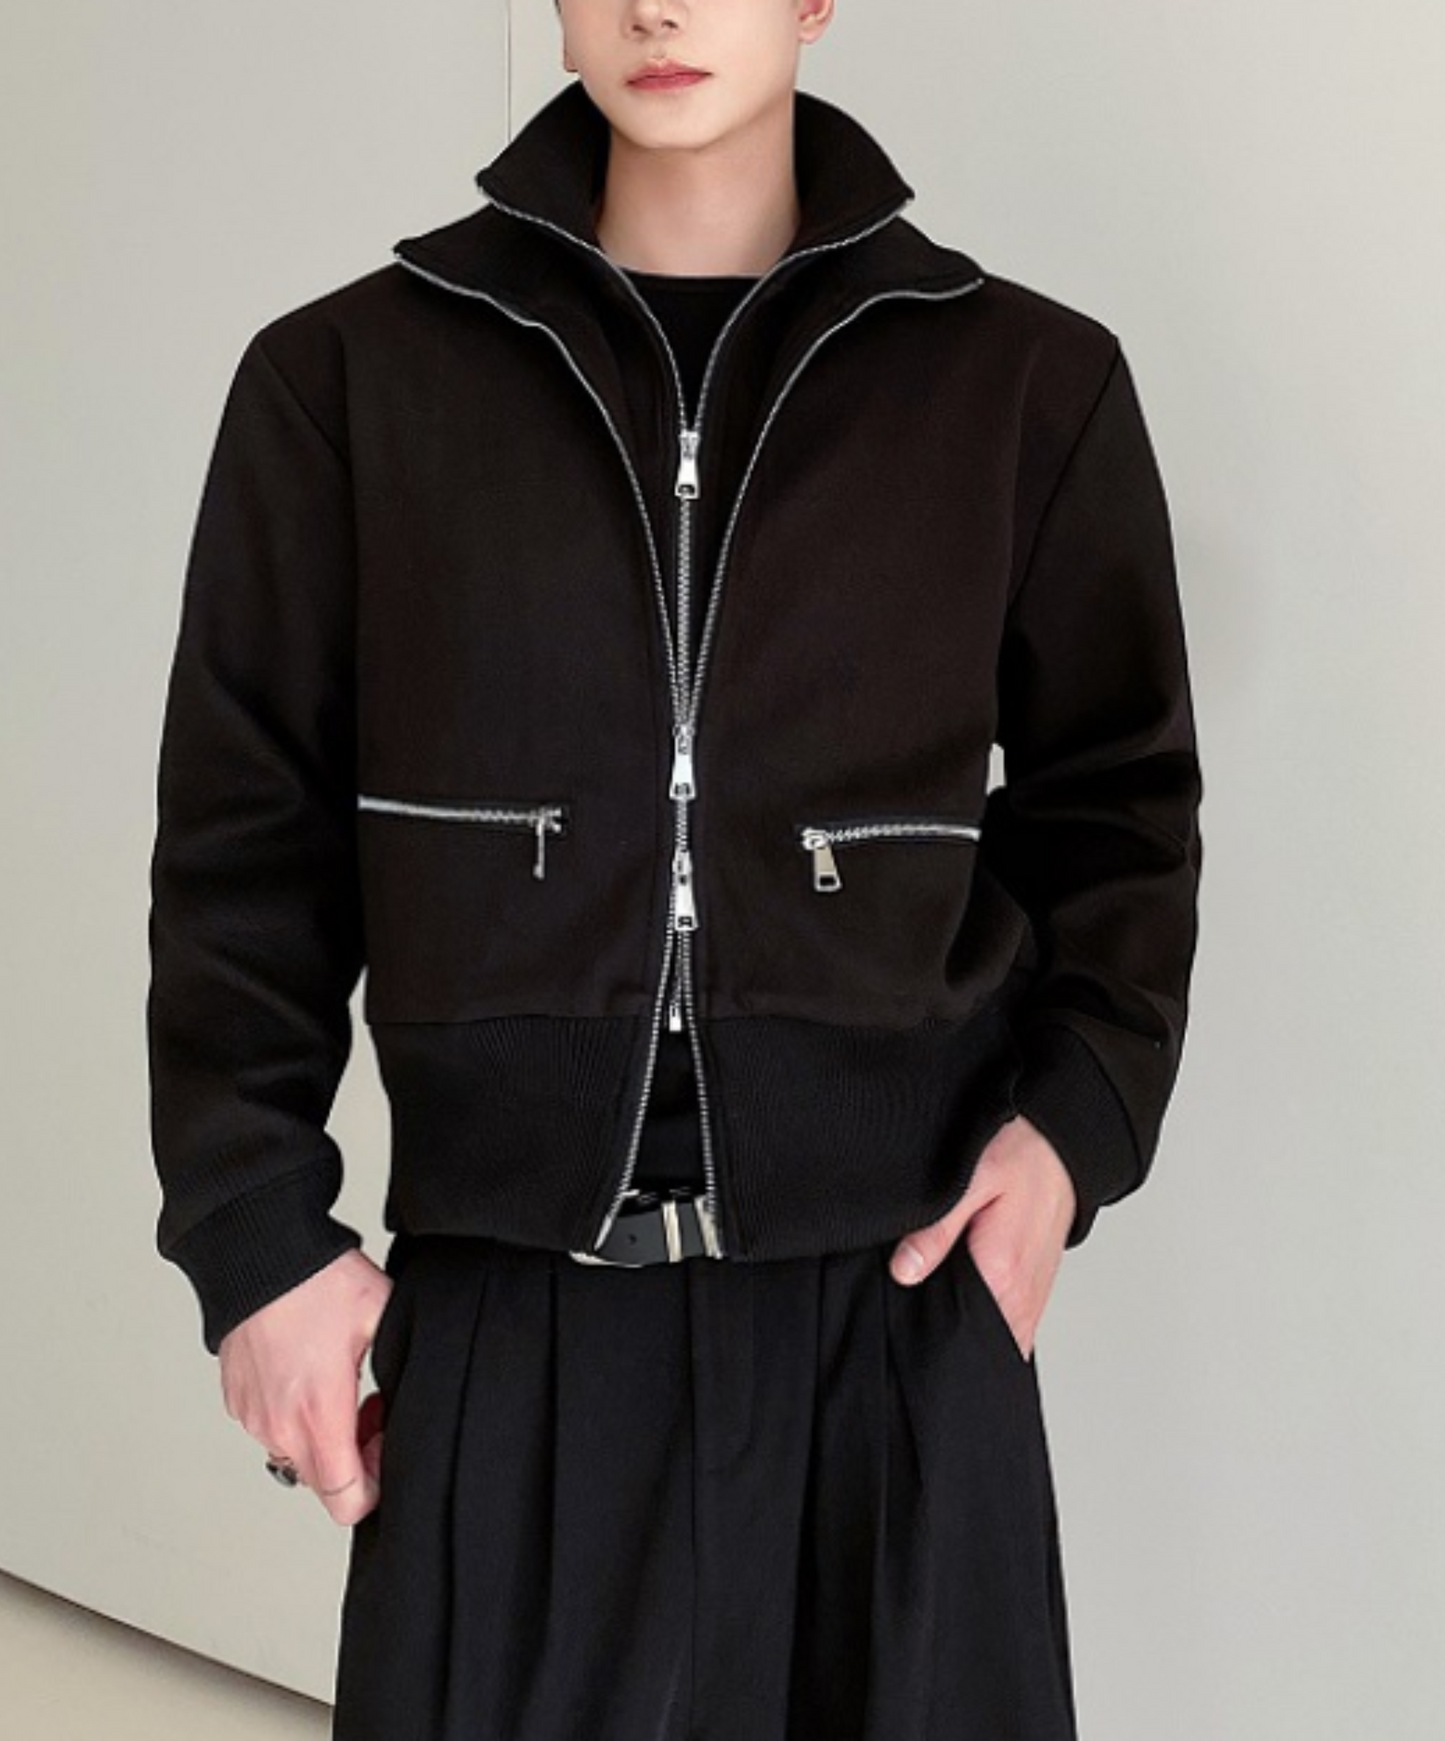 dark layered blouson jacket EN613